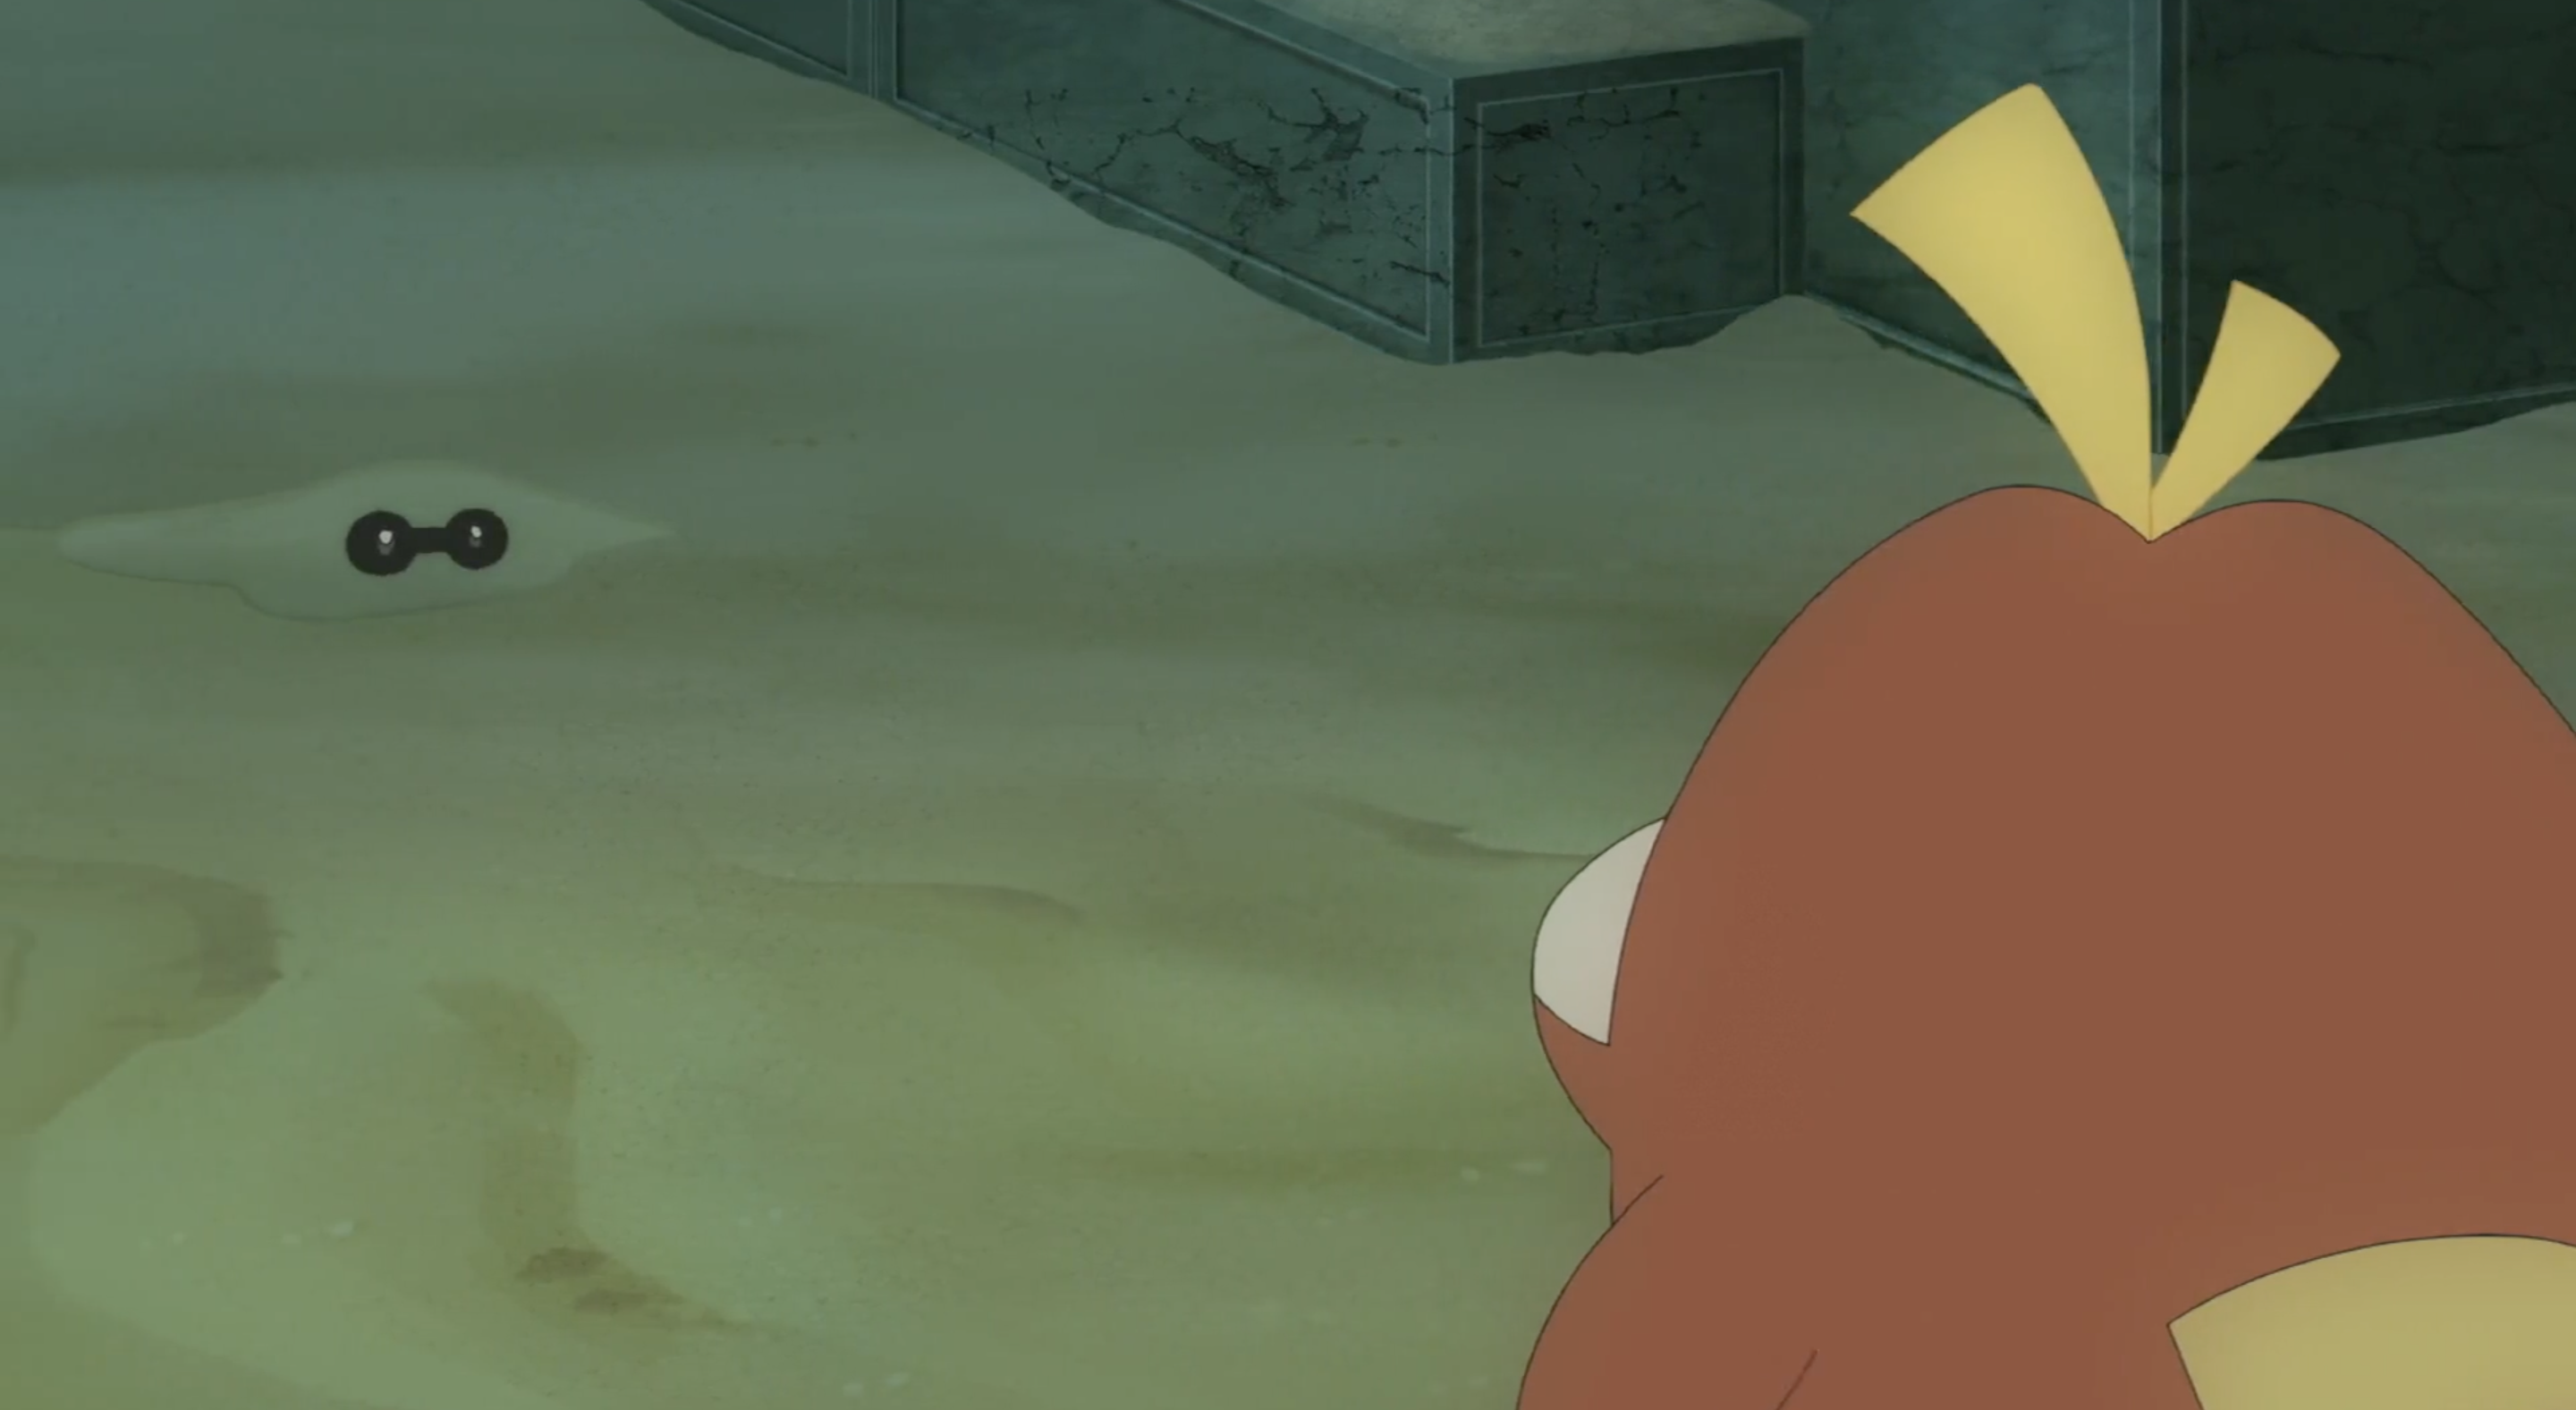 Fuecoco looking a certain Pokémon hiding in the sand